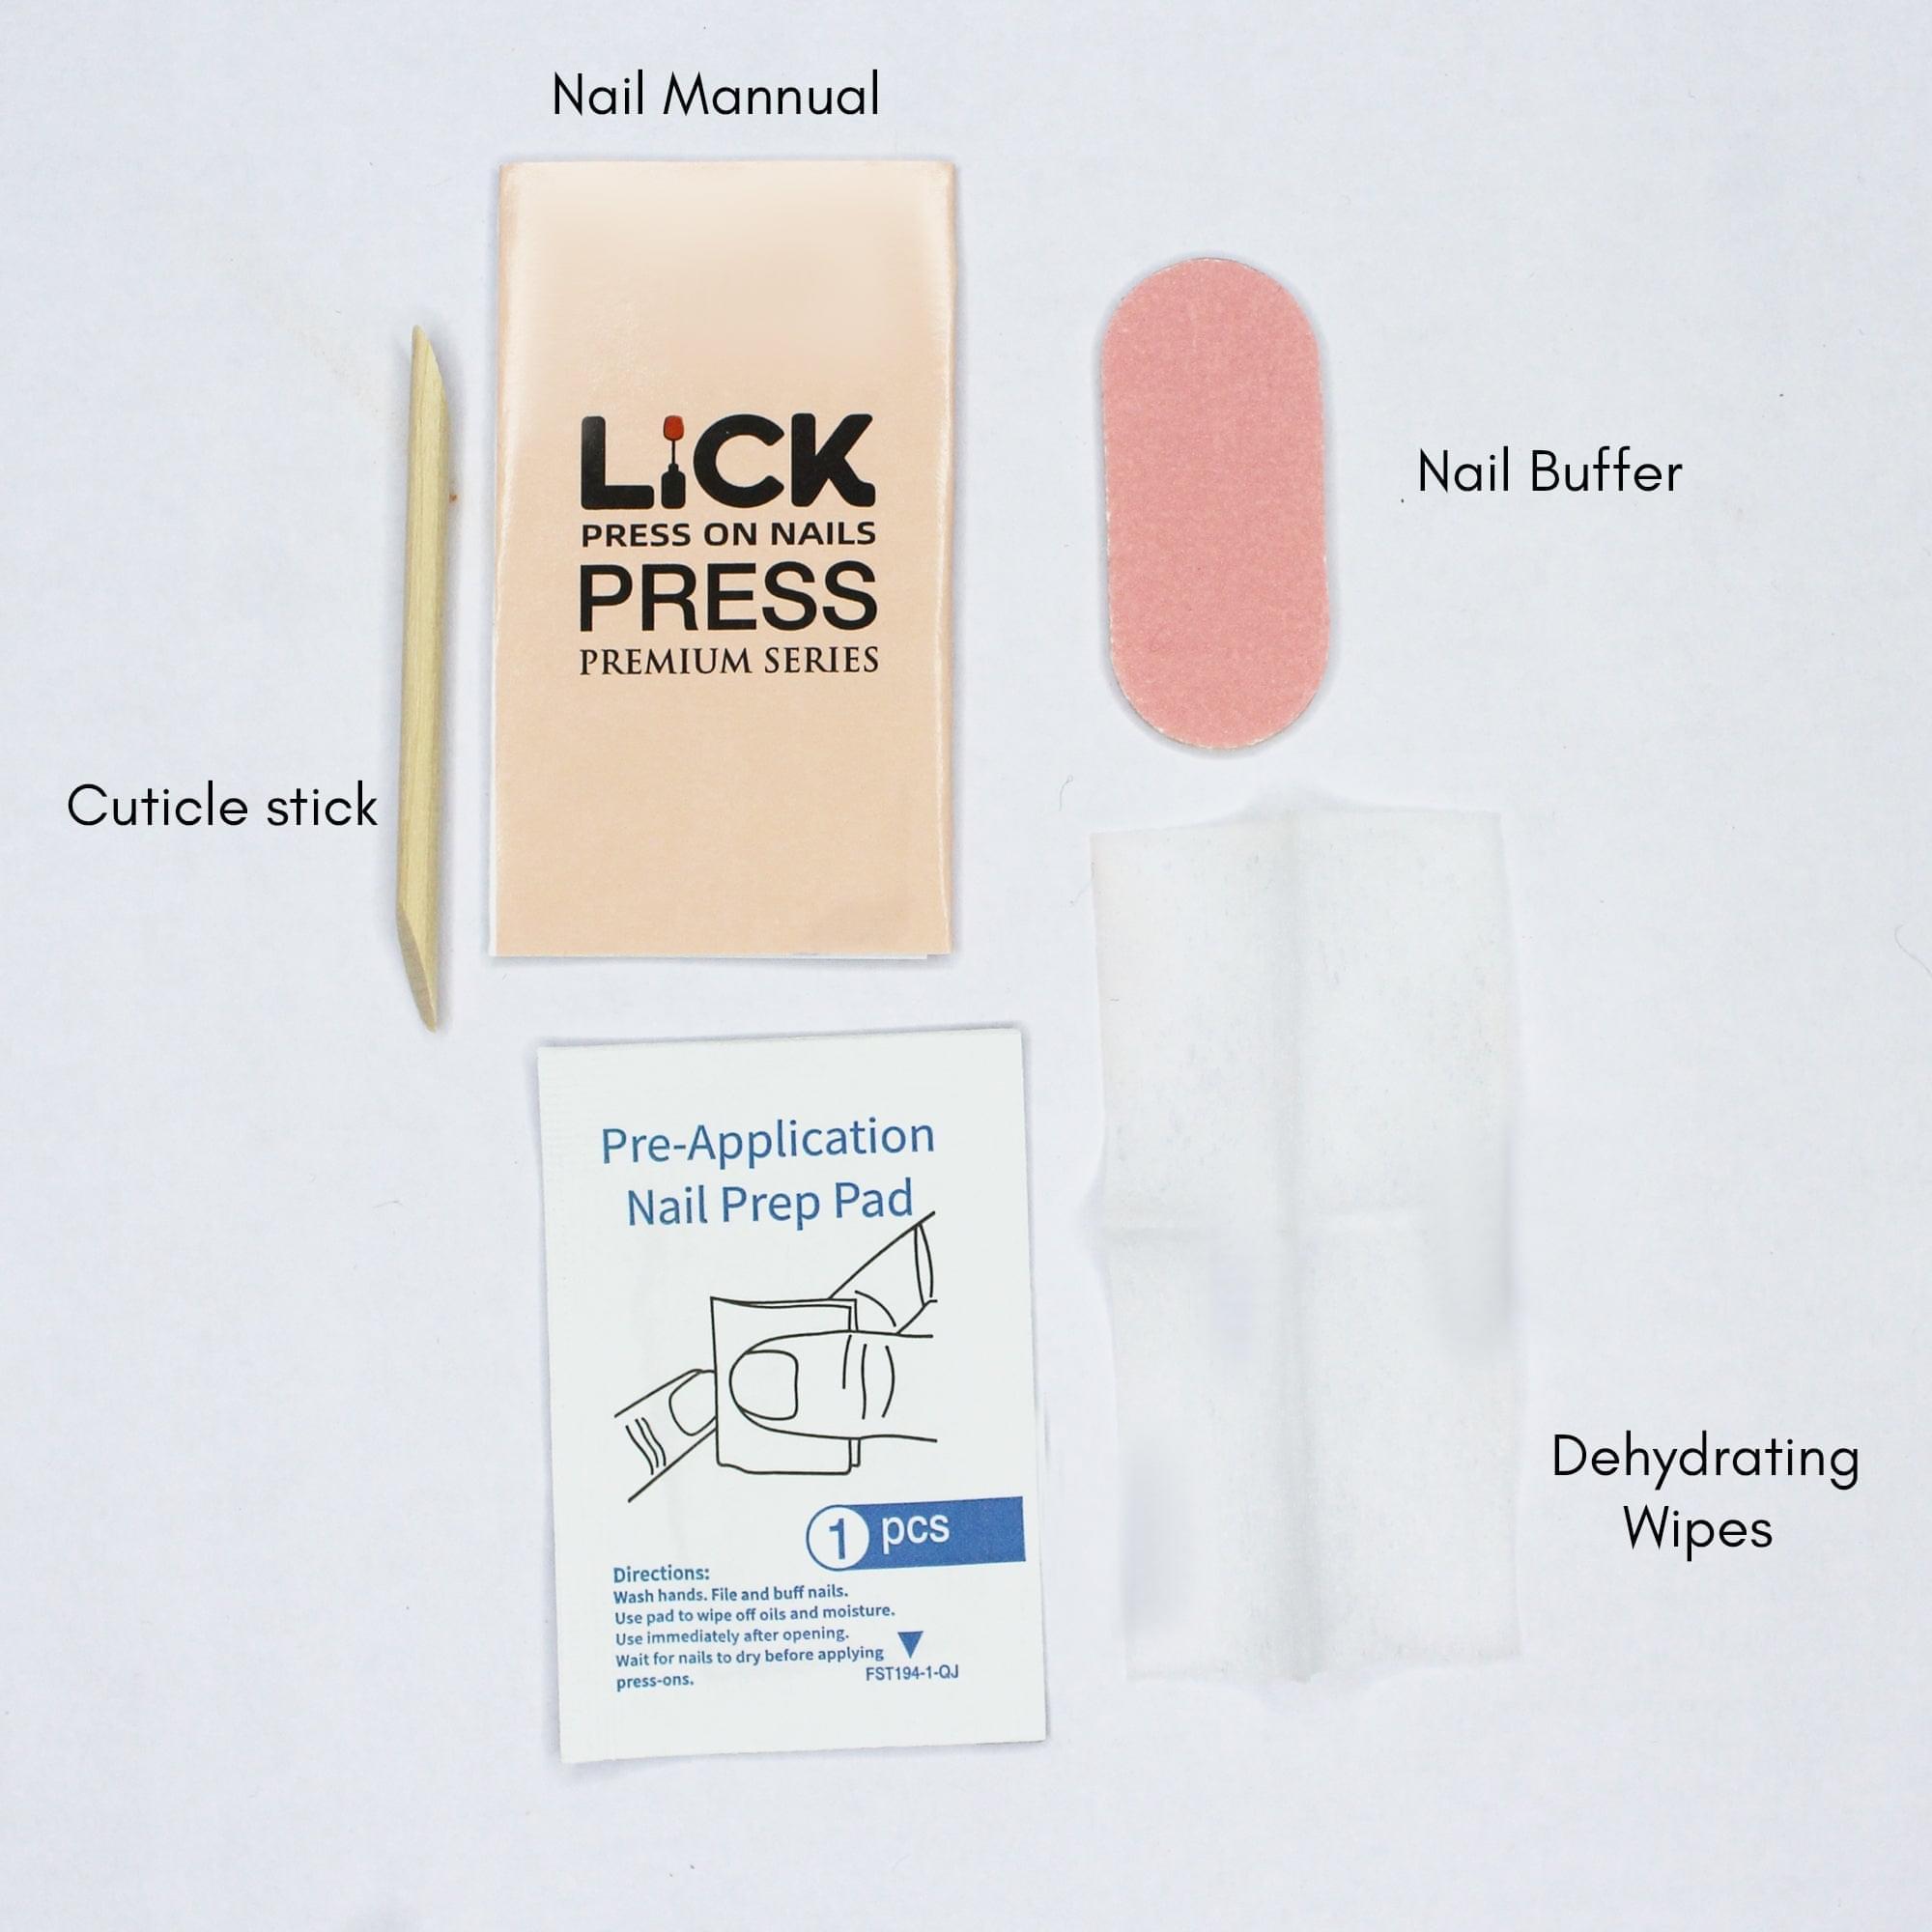 Lick Nail Glossy Finish Neon Yellow Ballerina Shape Press On Nails Pack Of 30 Pcs